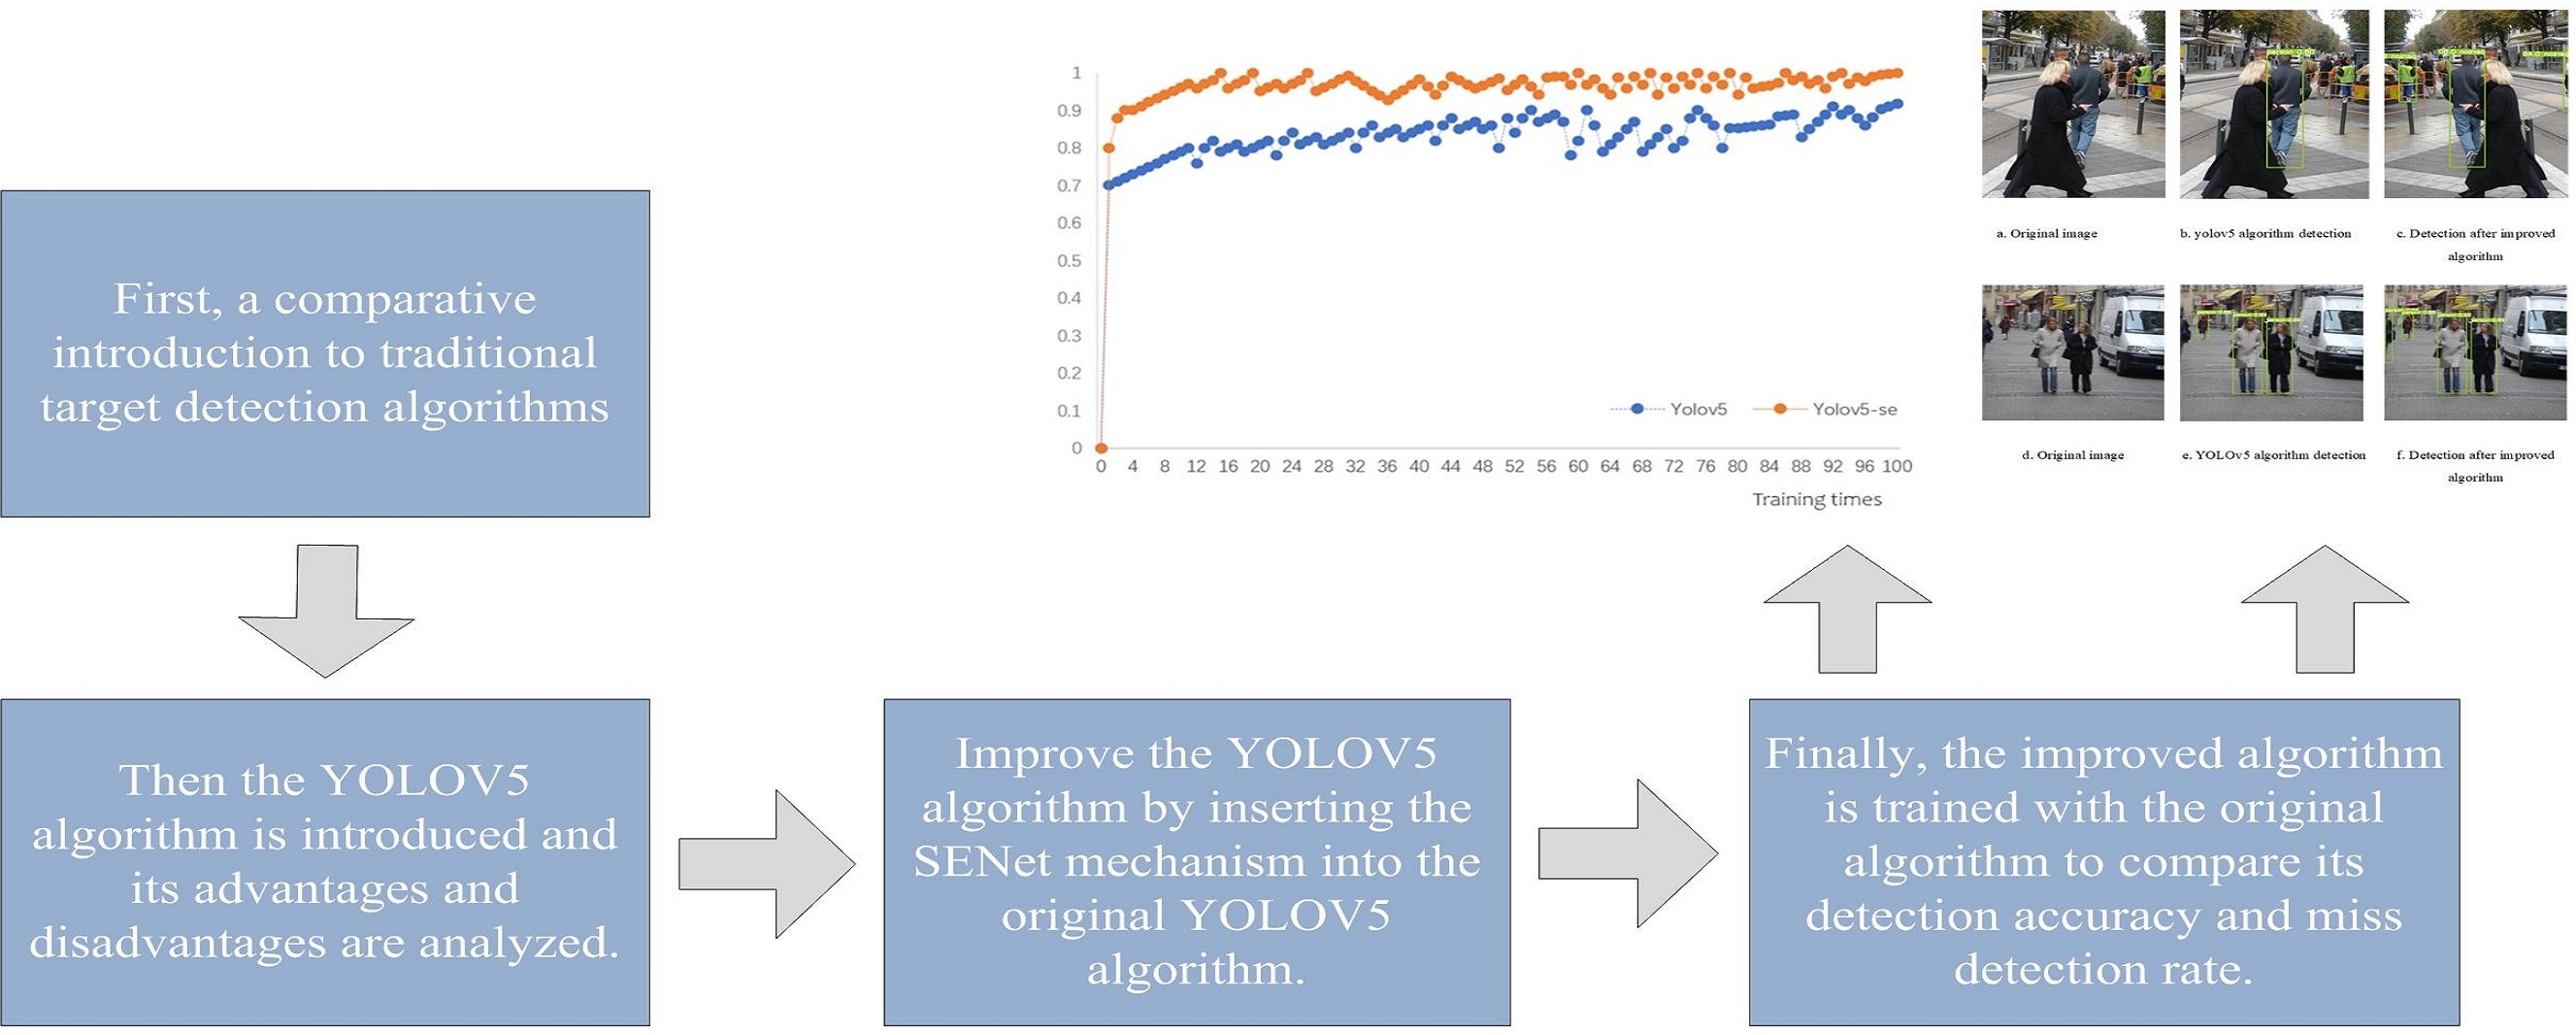 An improved YOLOv5 algorithm for obscured target recognition